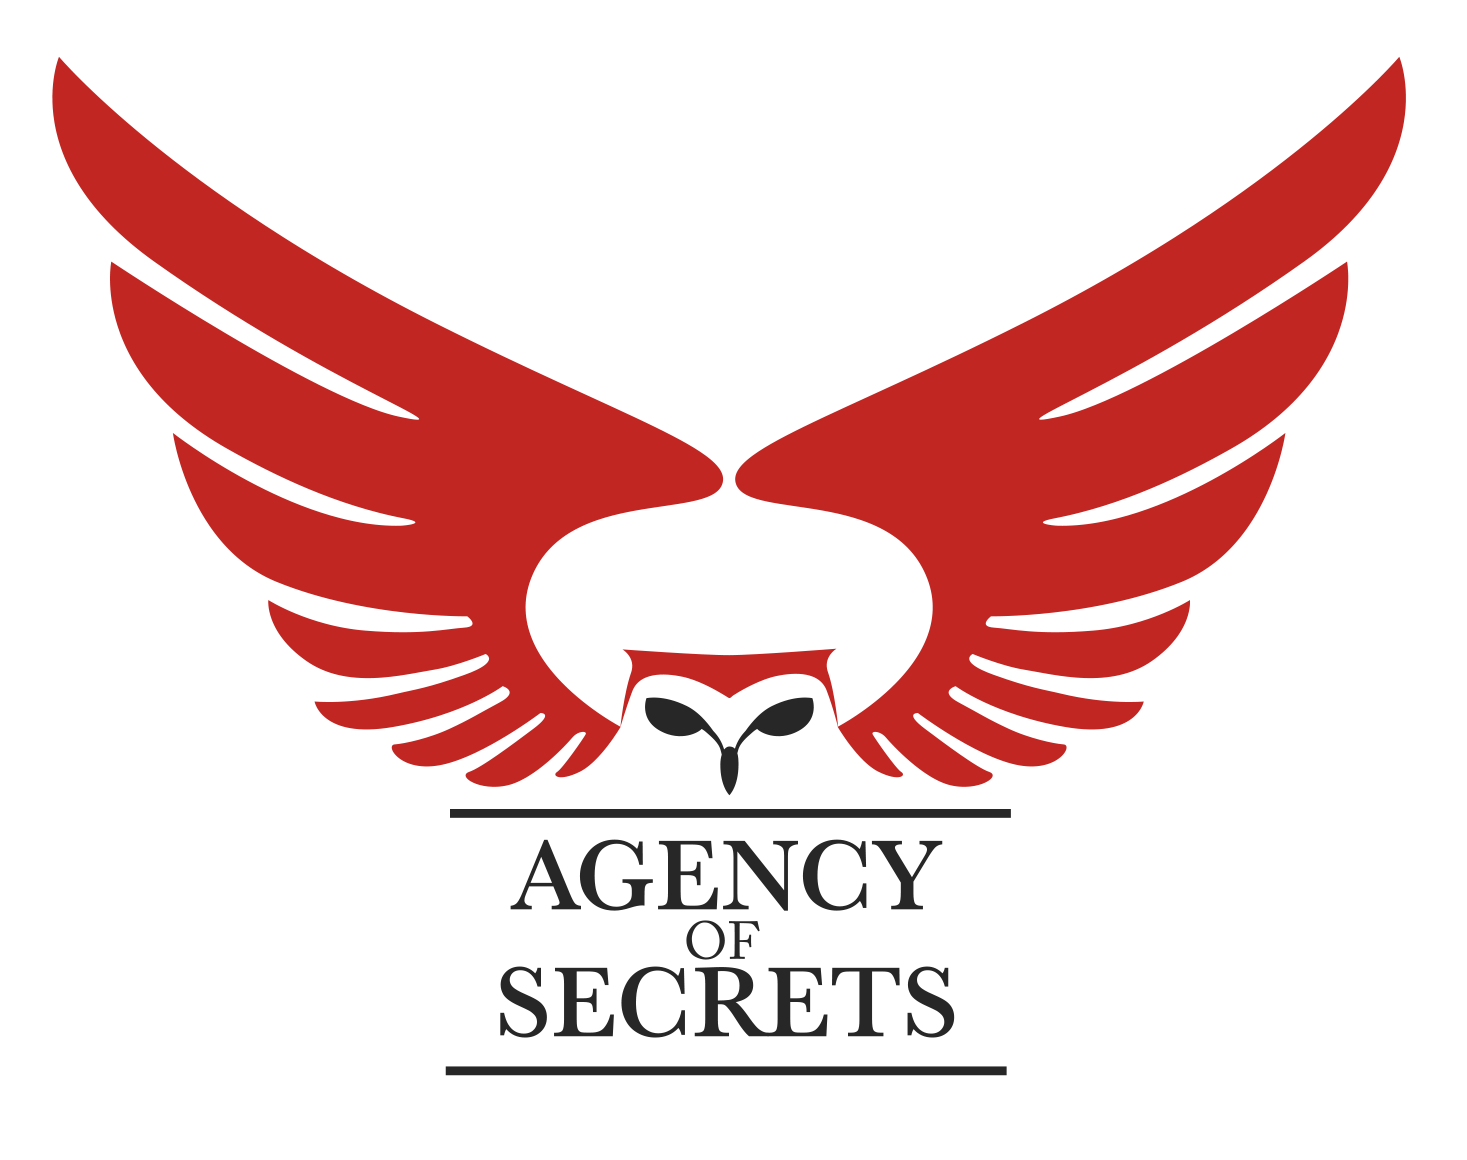 The Agency Of Secrets